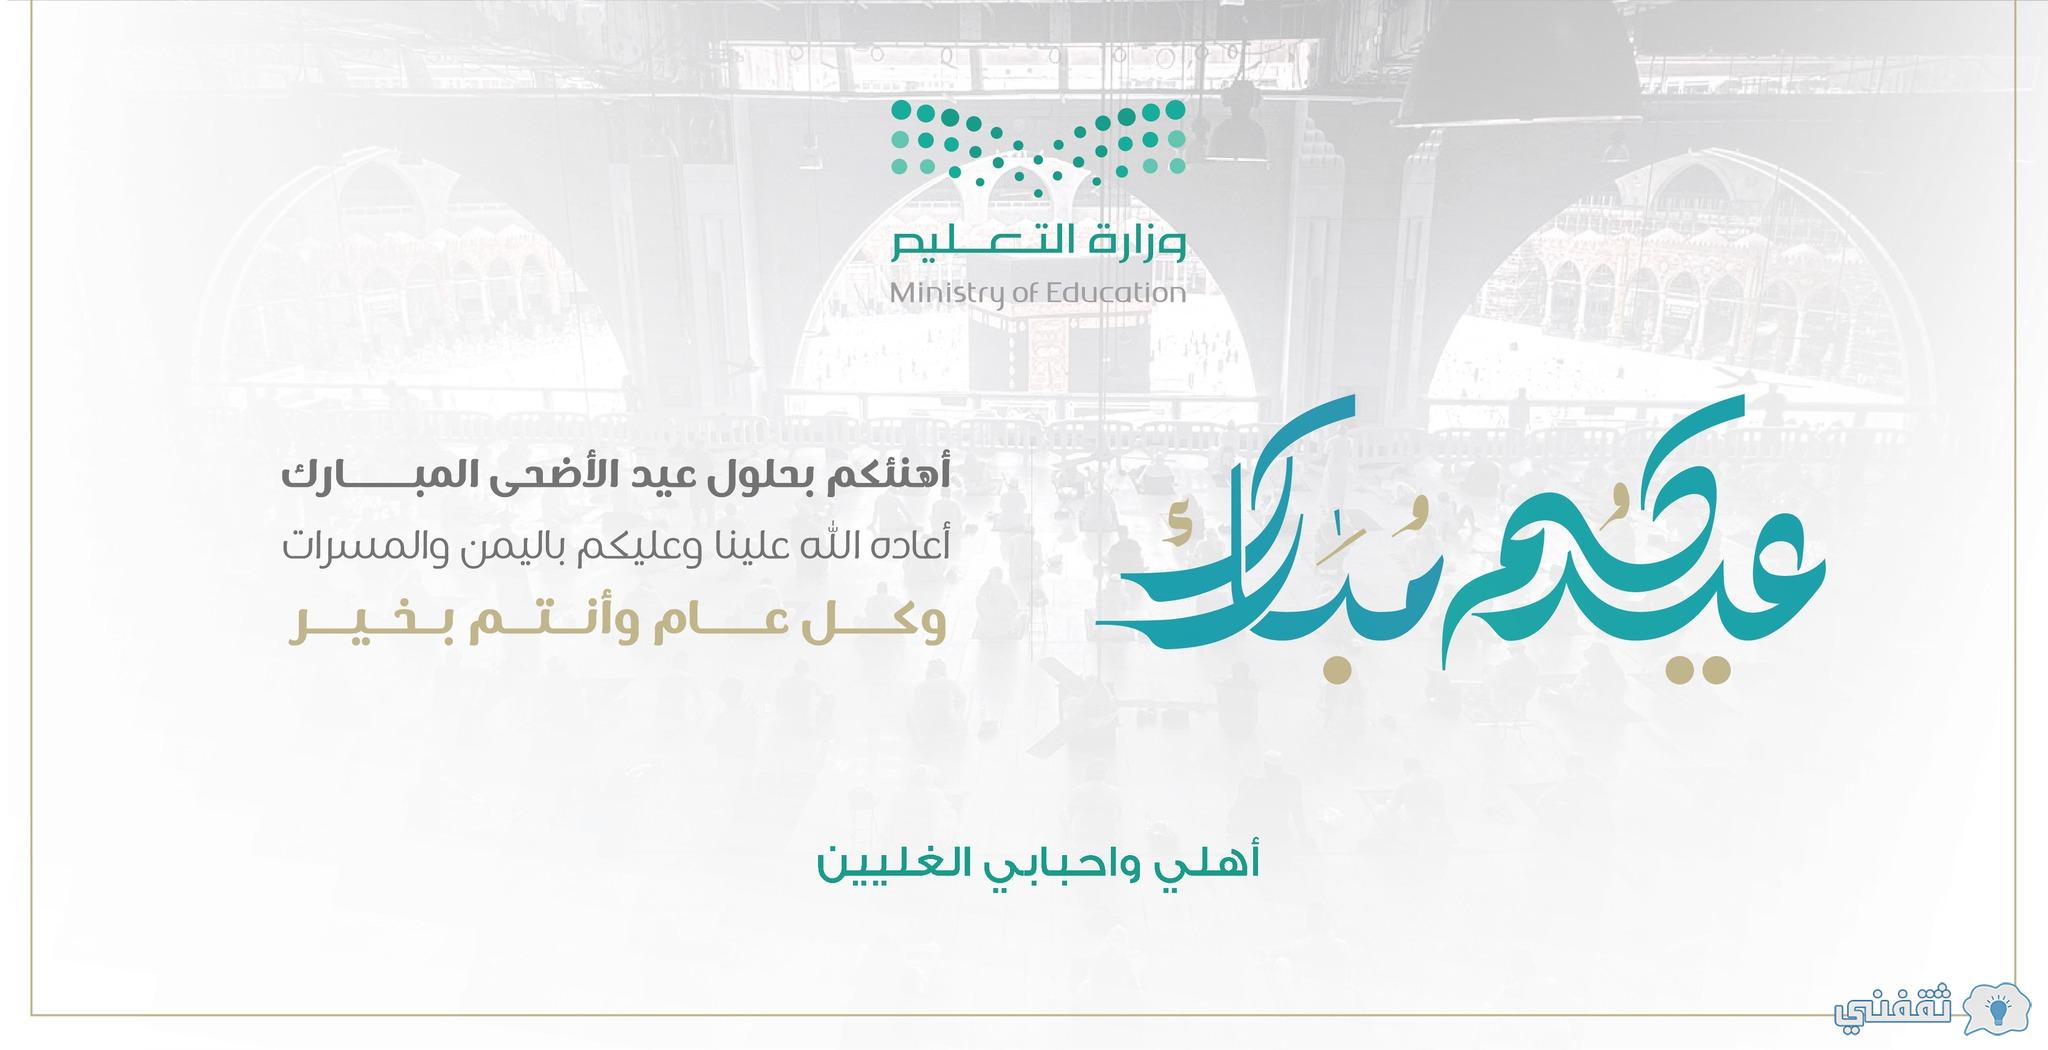 [LINK] رابط تصميم بطاقة عيد الأضحى portaleservices.moj.gov.sa وزارة العدل السعودية 1443 مع الخطوات